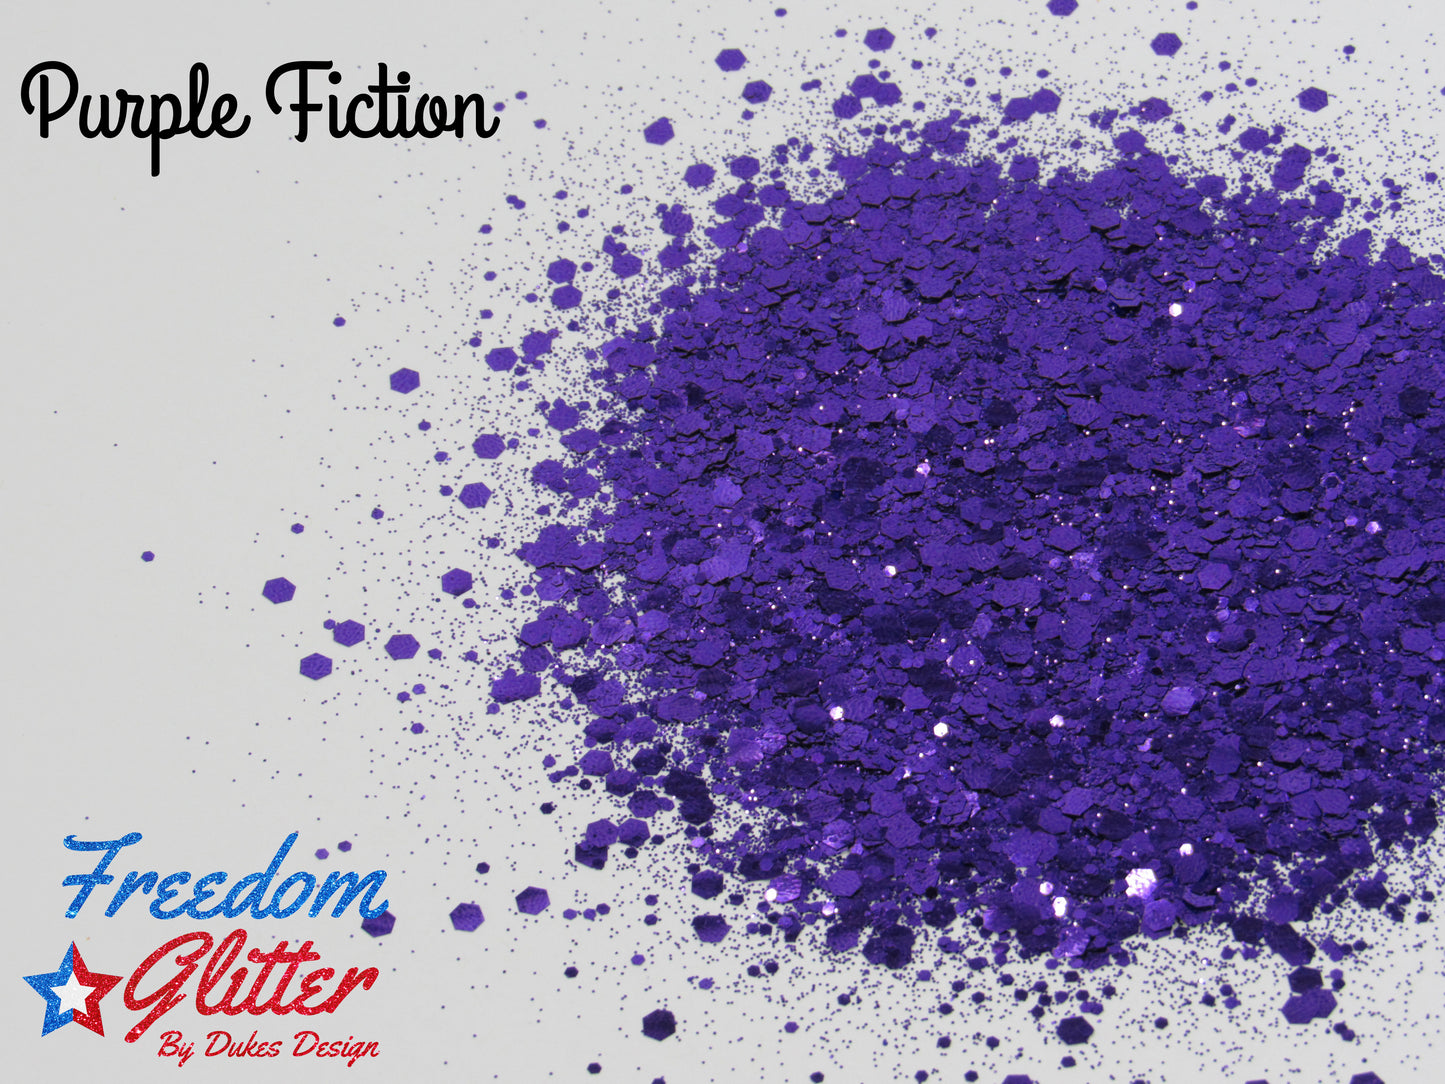 Purple Fiction (Metallic Glitter)